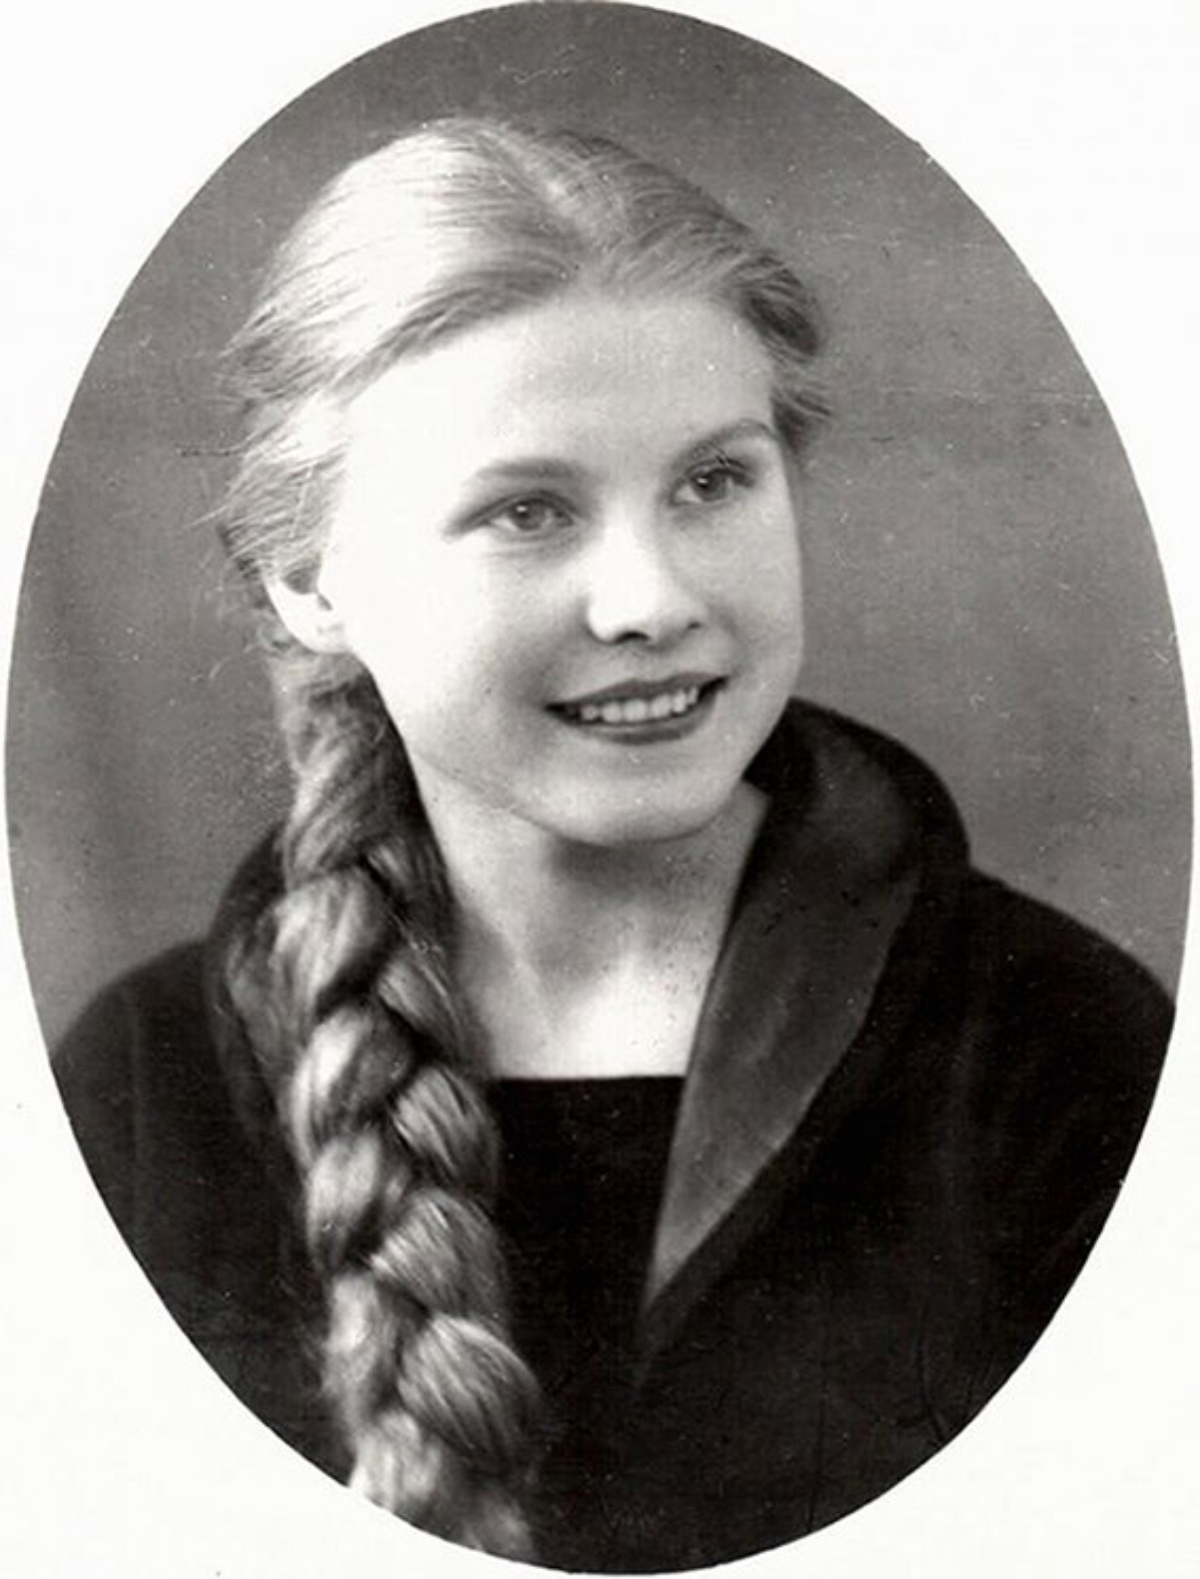 Мария Пахоменко